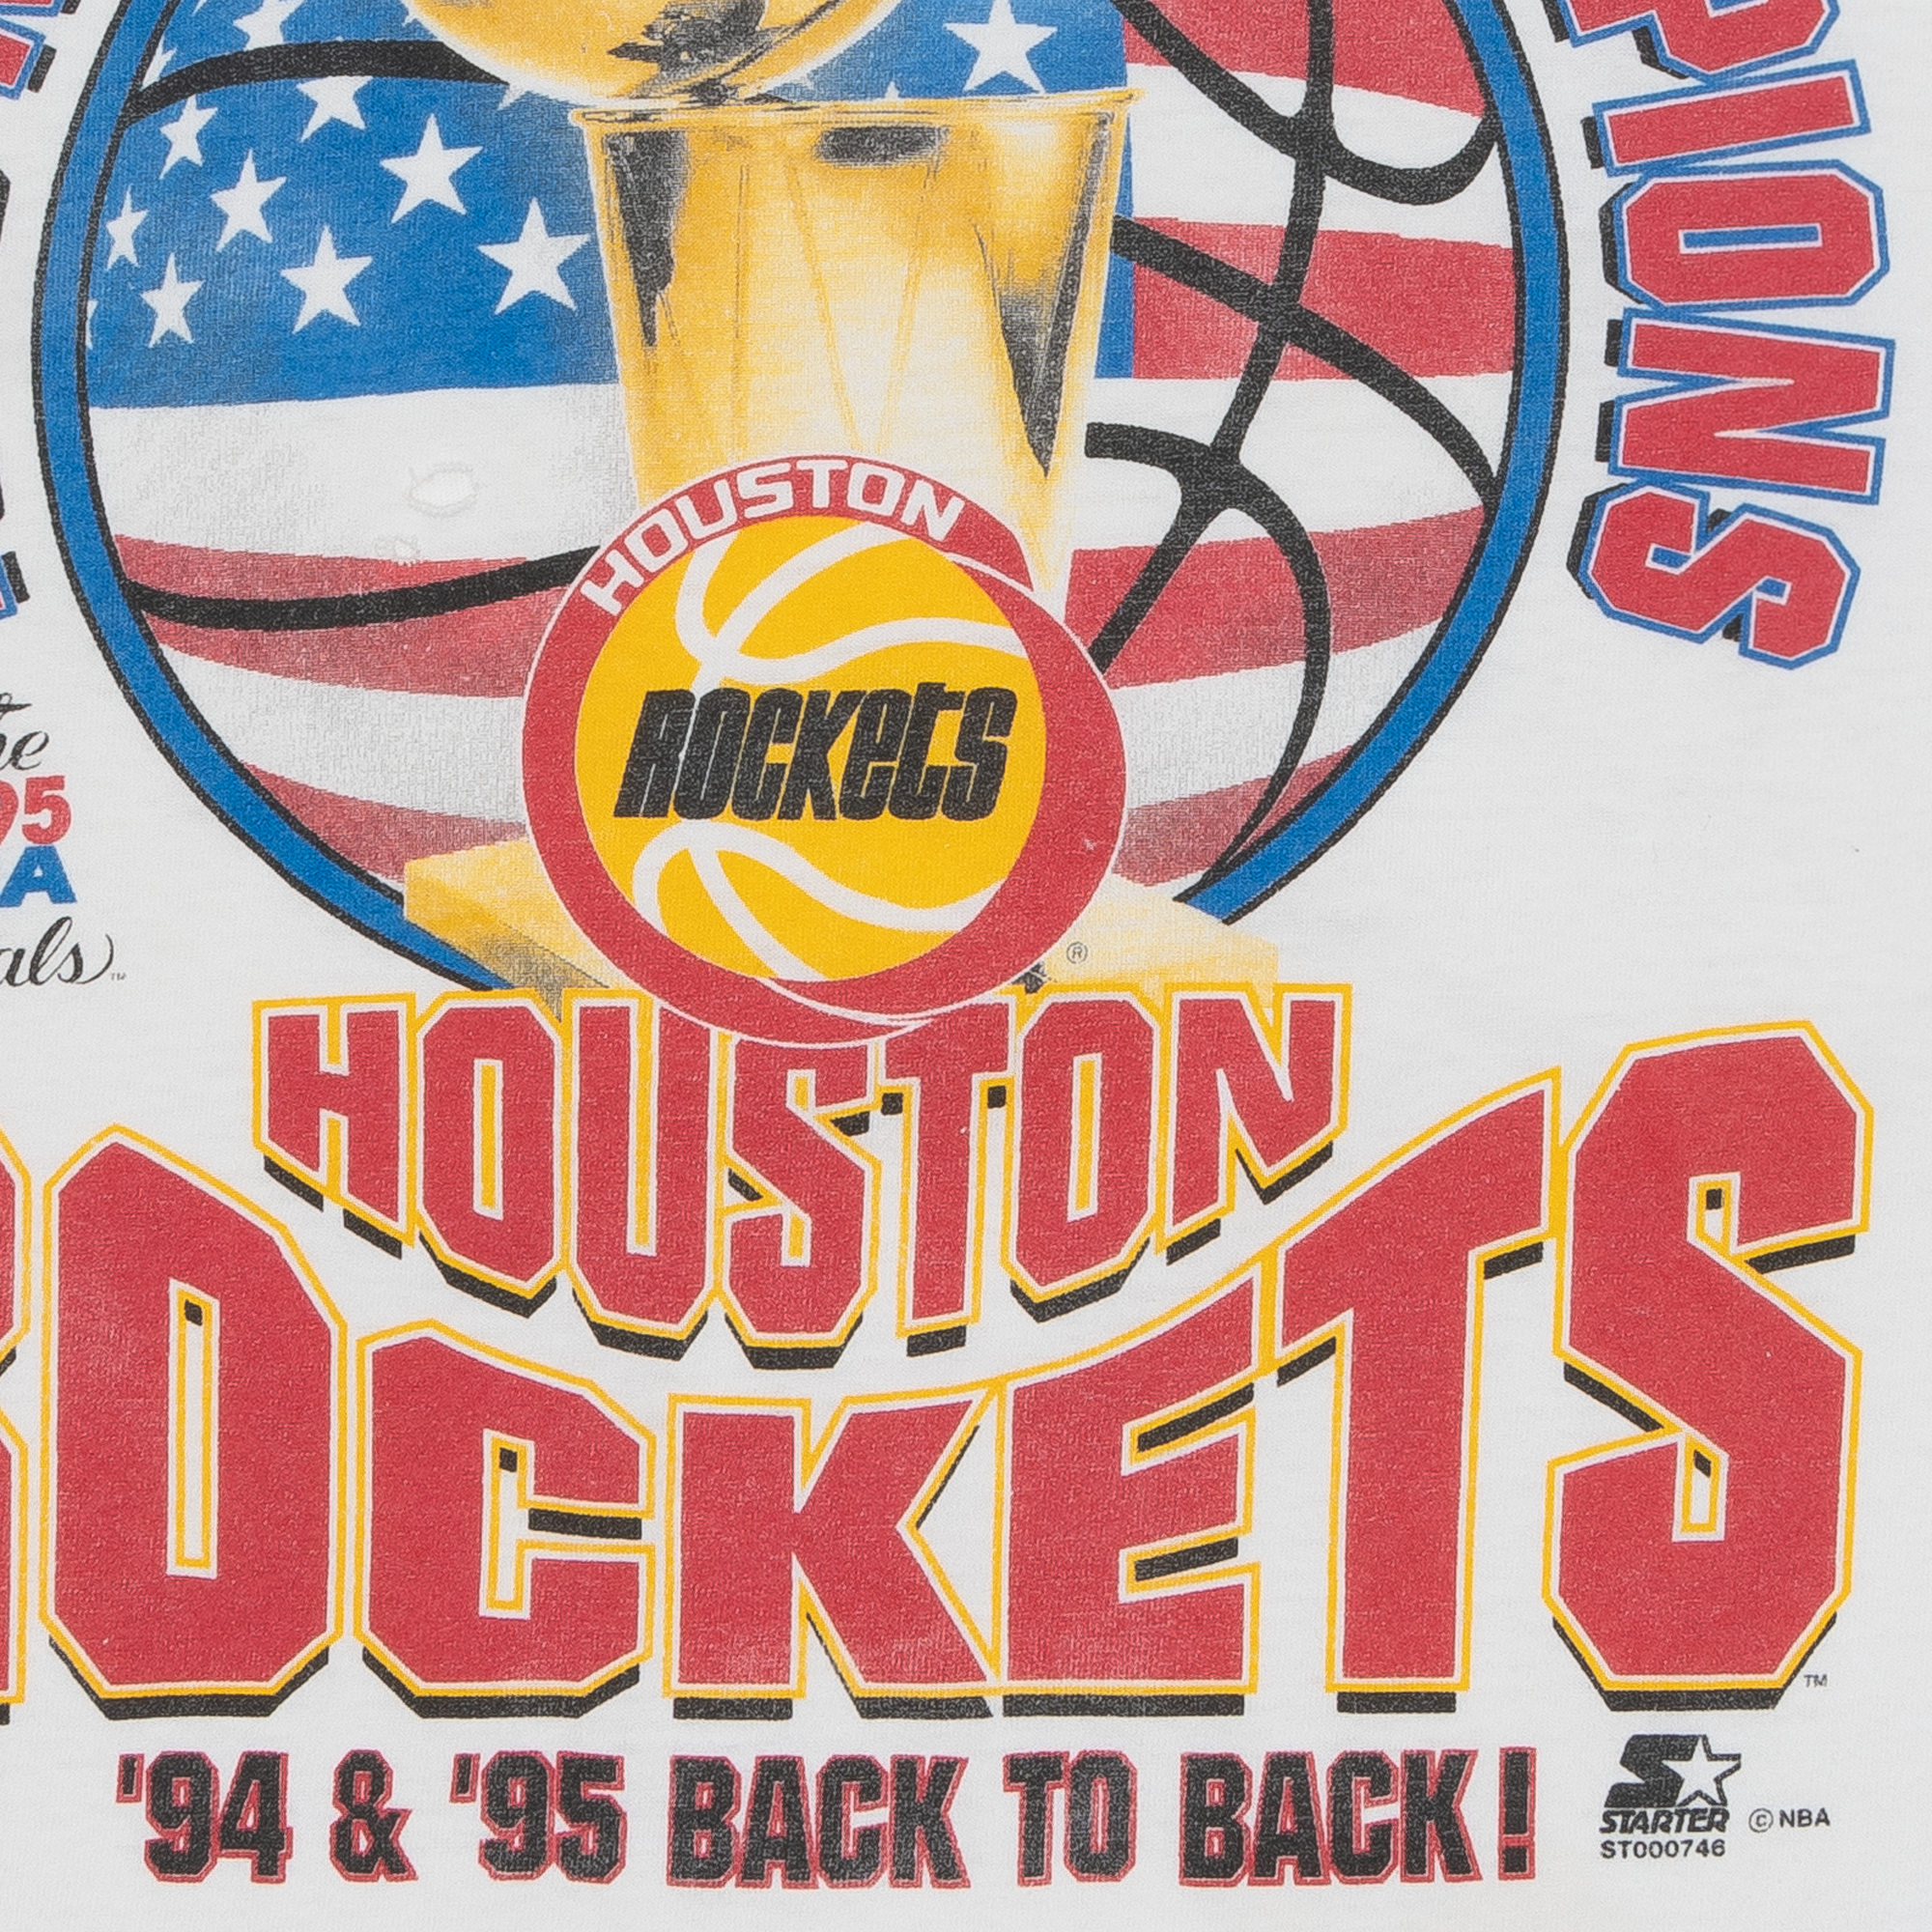 Houston Rockets 1995 World Champions NBA Tee White-PLUS